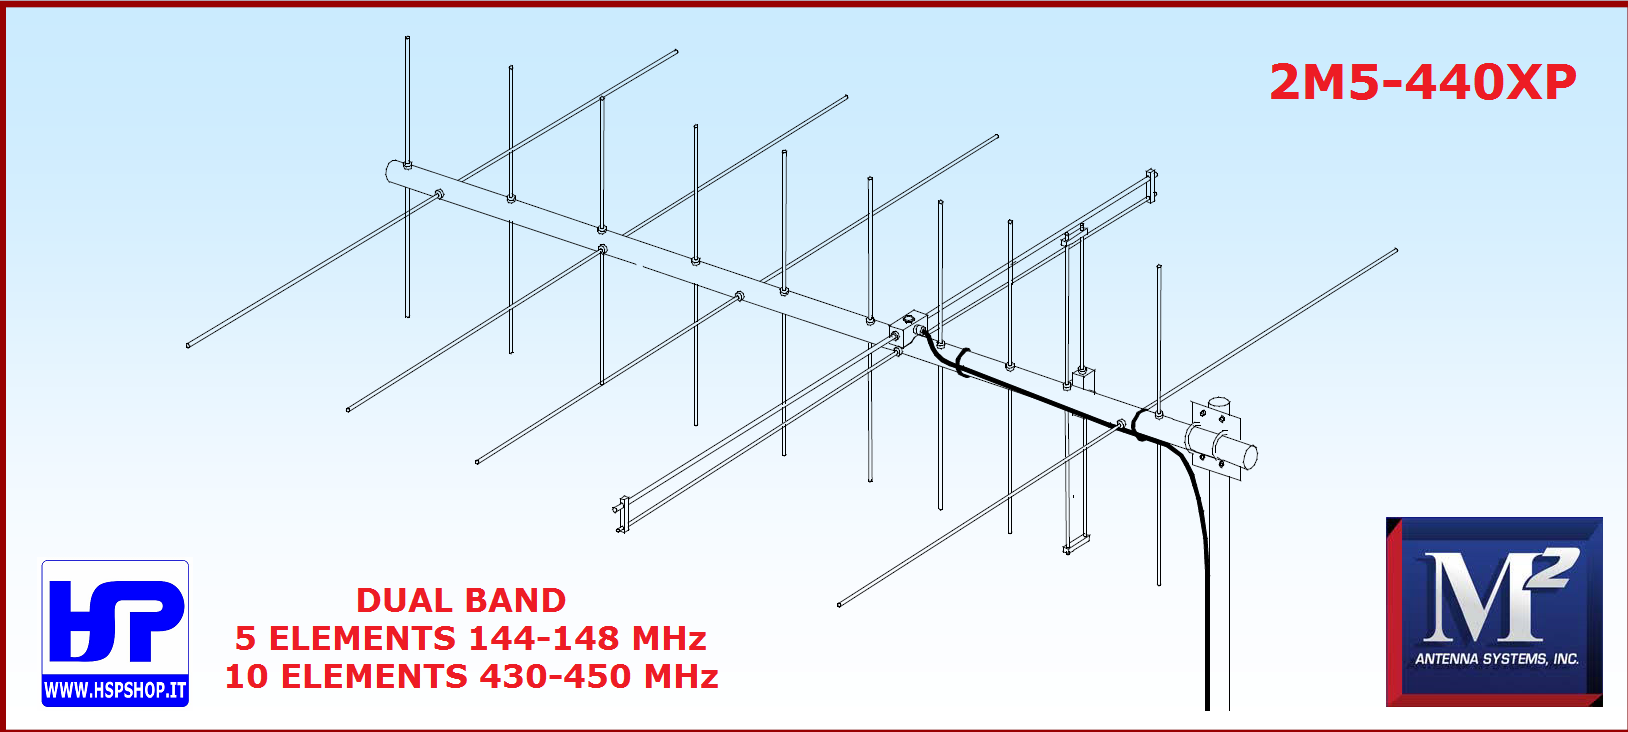 M2 -2M5-440XP - BIBANDA VHF/UHF 144/430 MHz